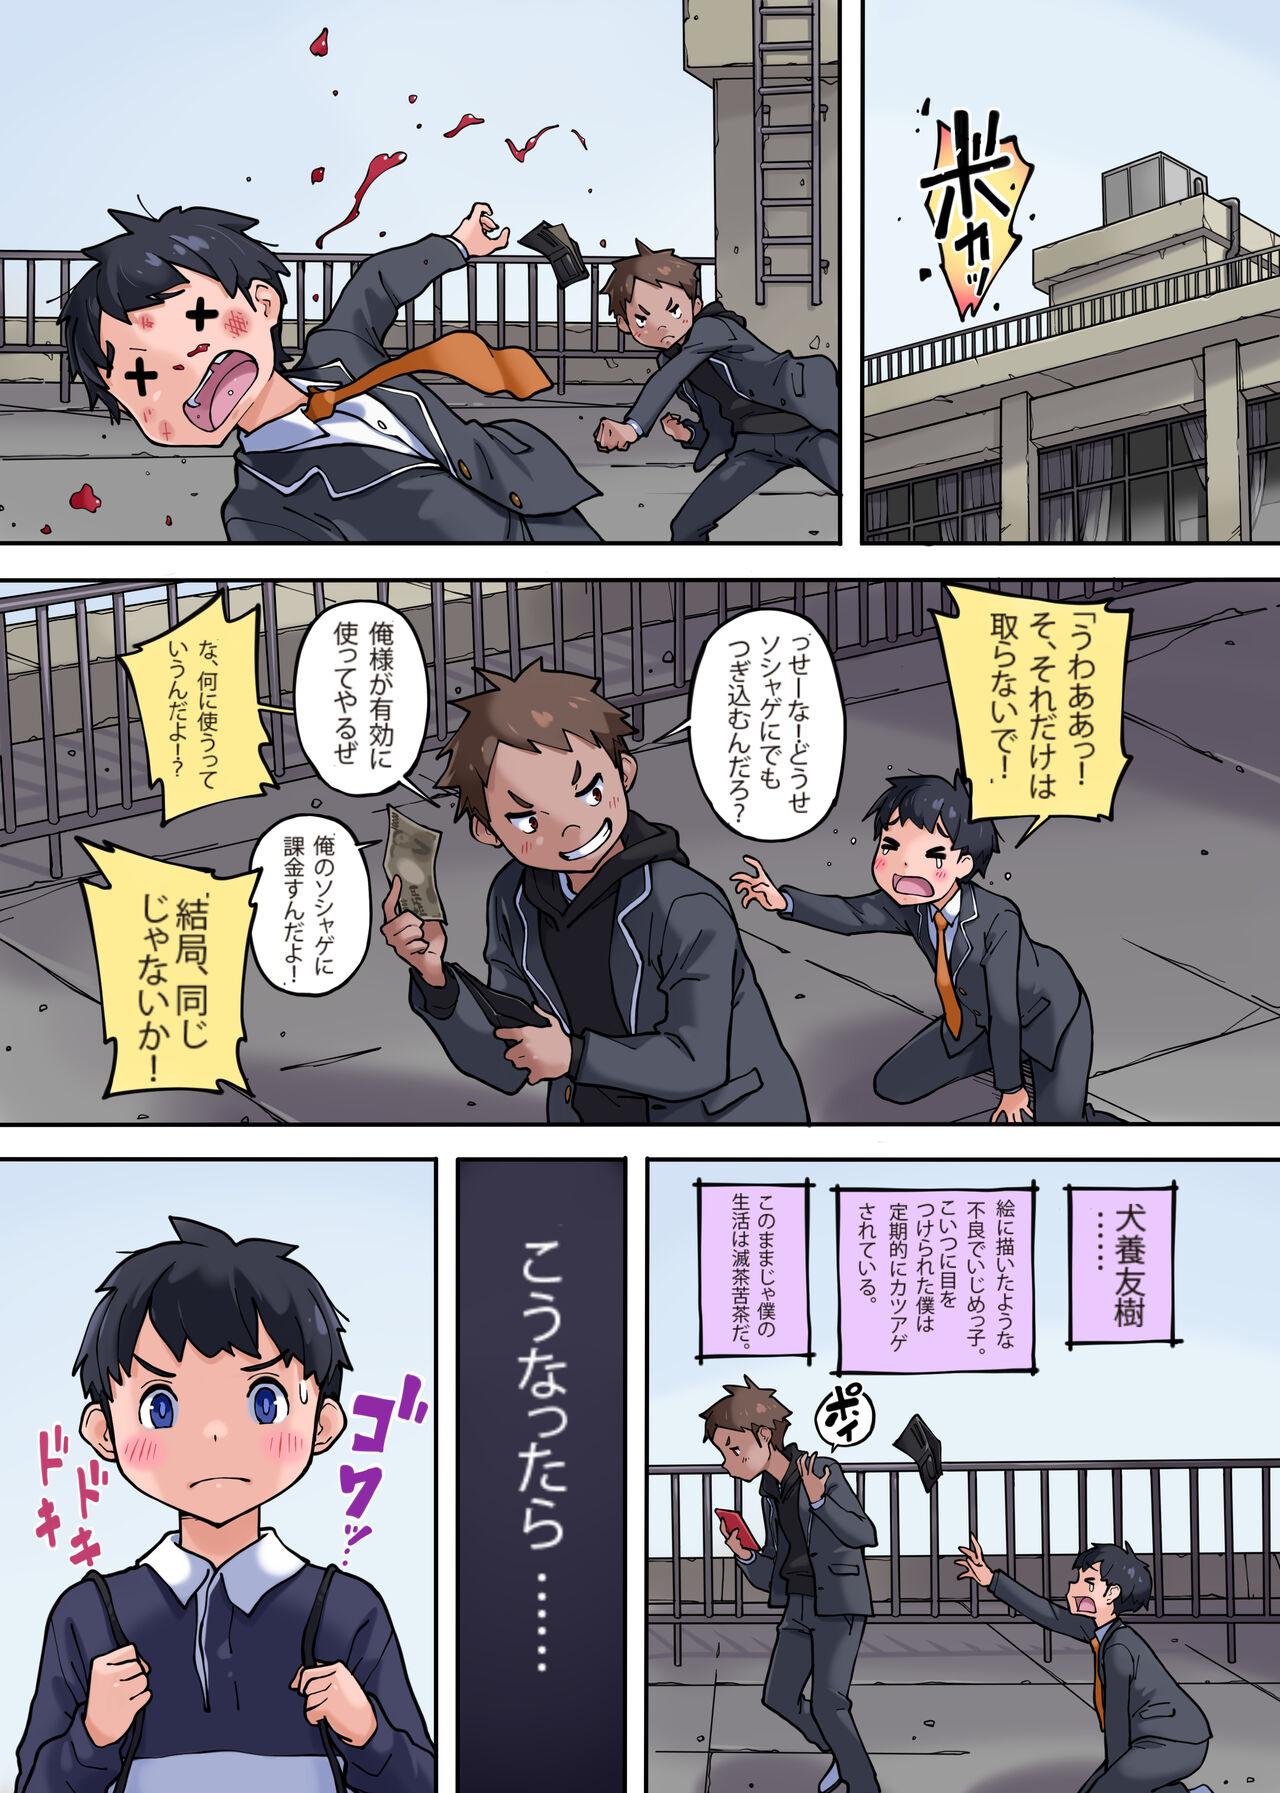 Short Ijime-kko no ane o ne totta hanashi w - Original Car - Page 1